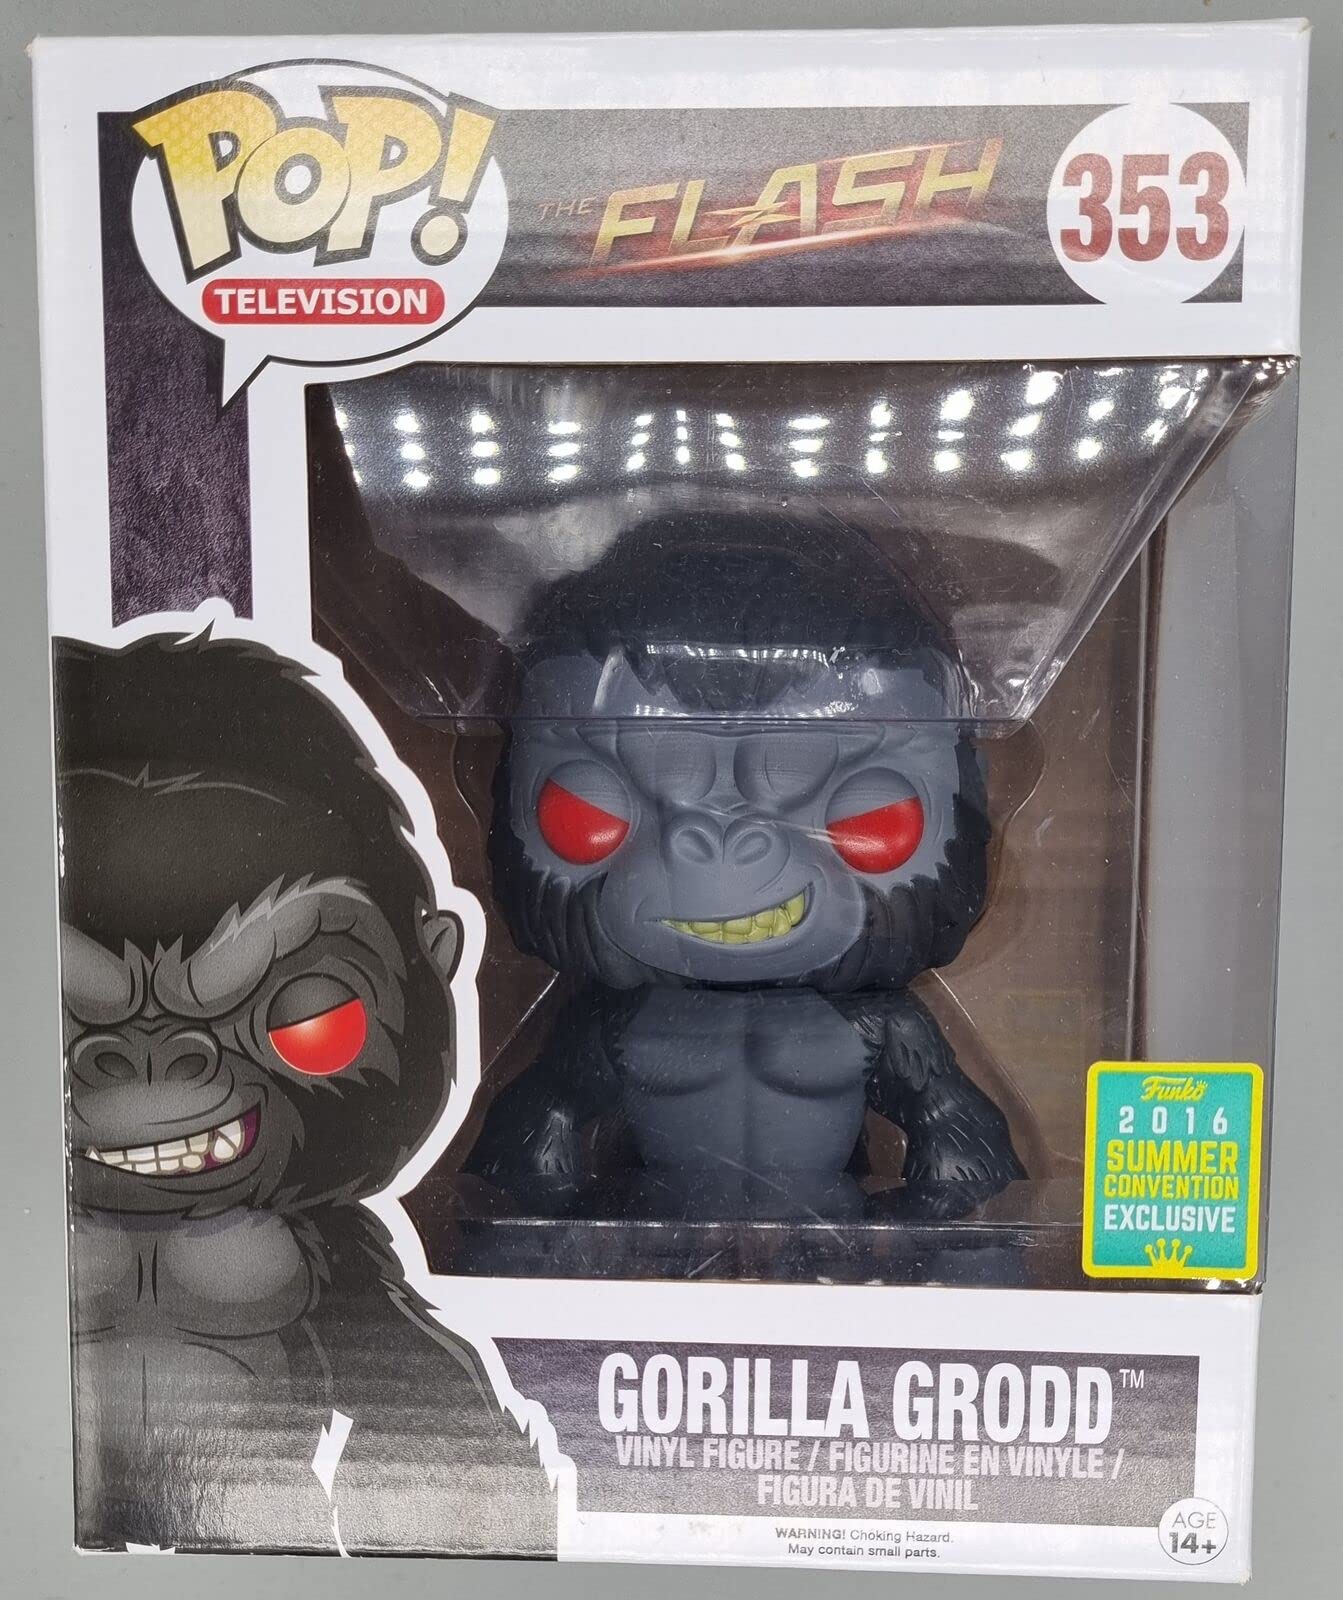 Funko POP! Television Flash 6 Inch Gorilla Grodd #353 Exclusive